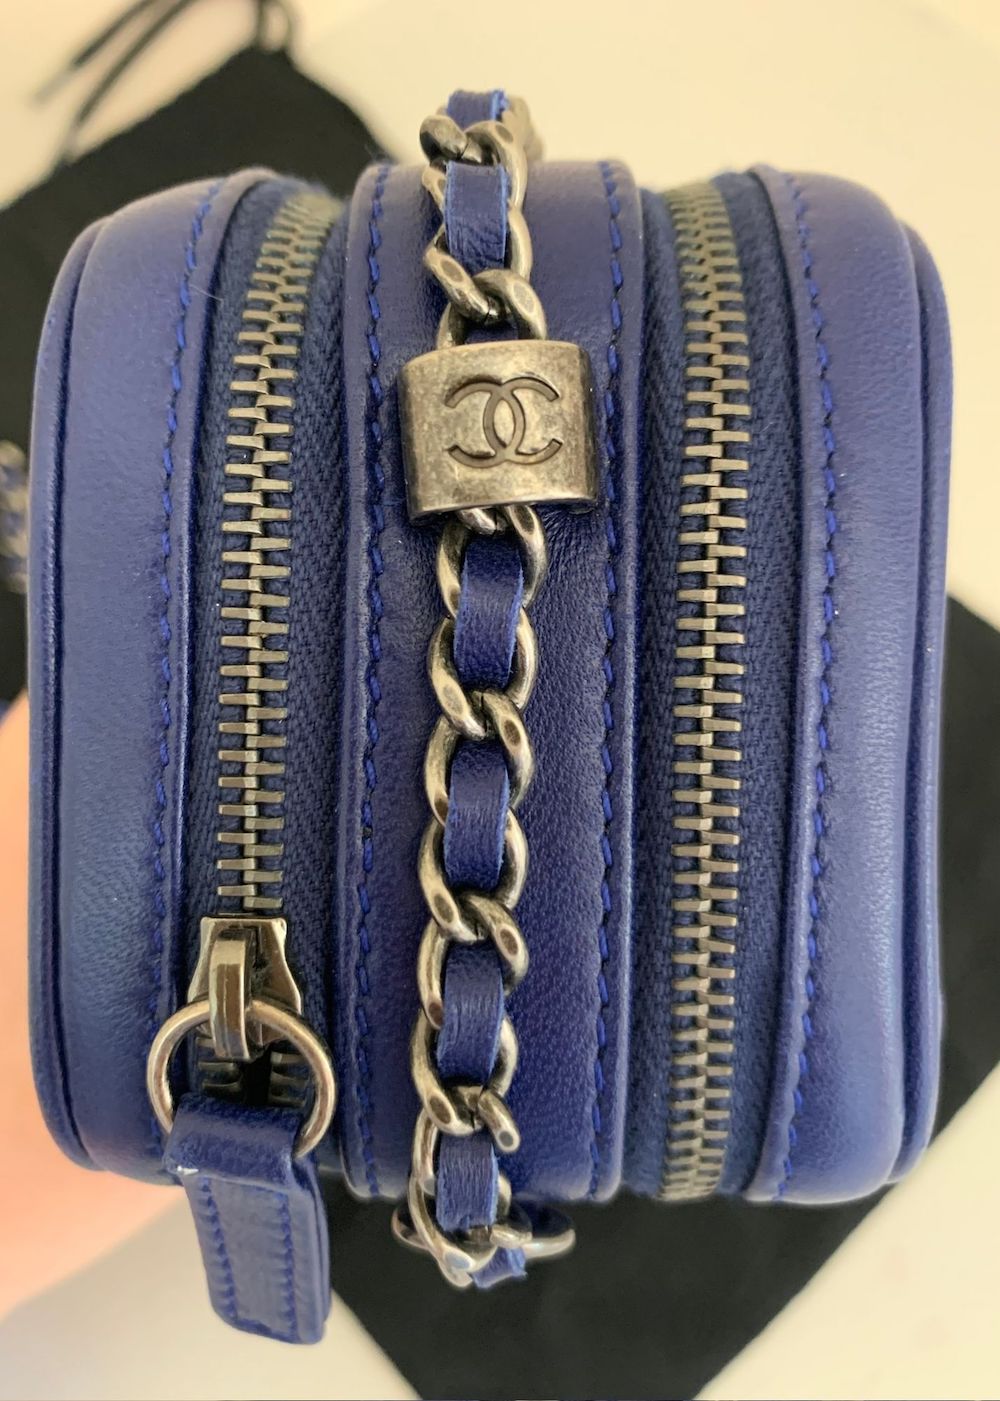 Chanel Coco Boy Camera Bag Mini Blue